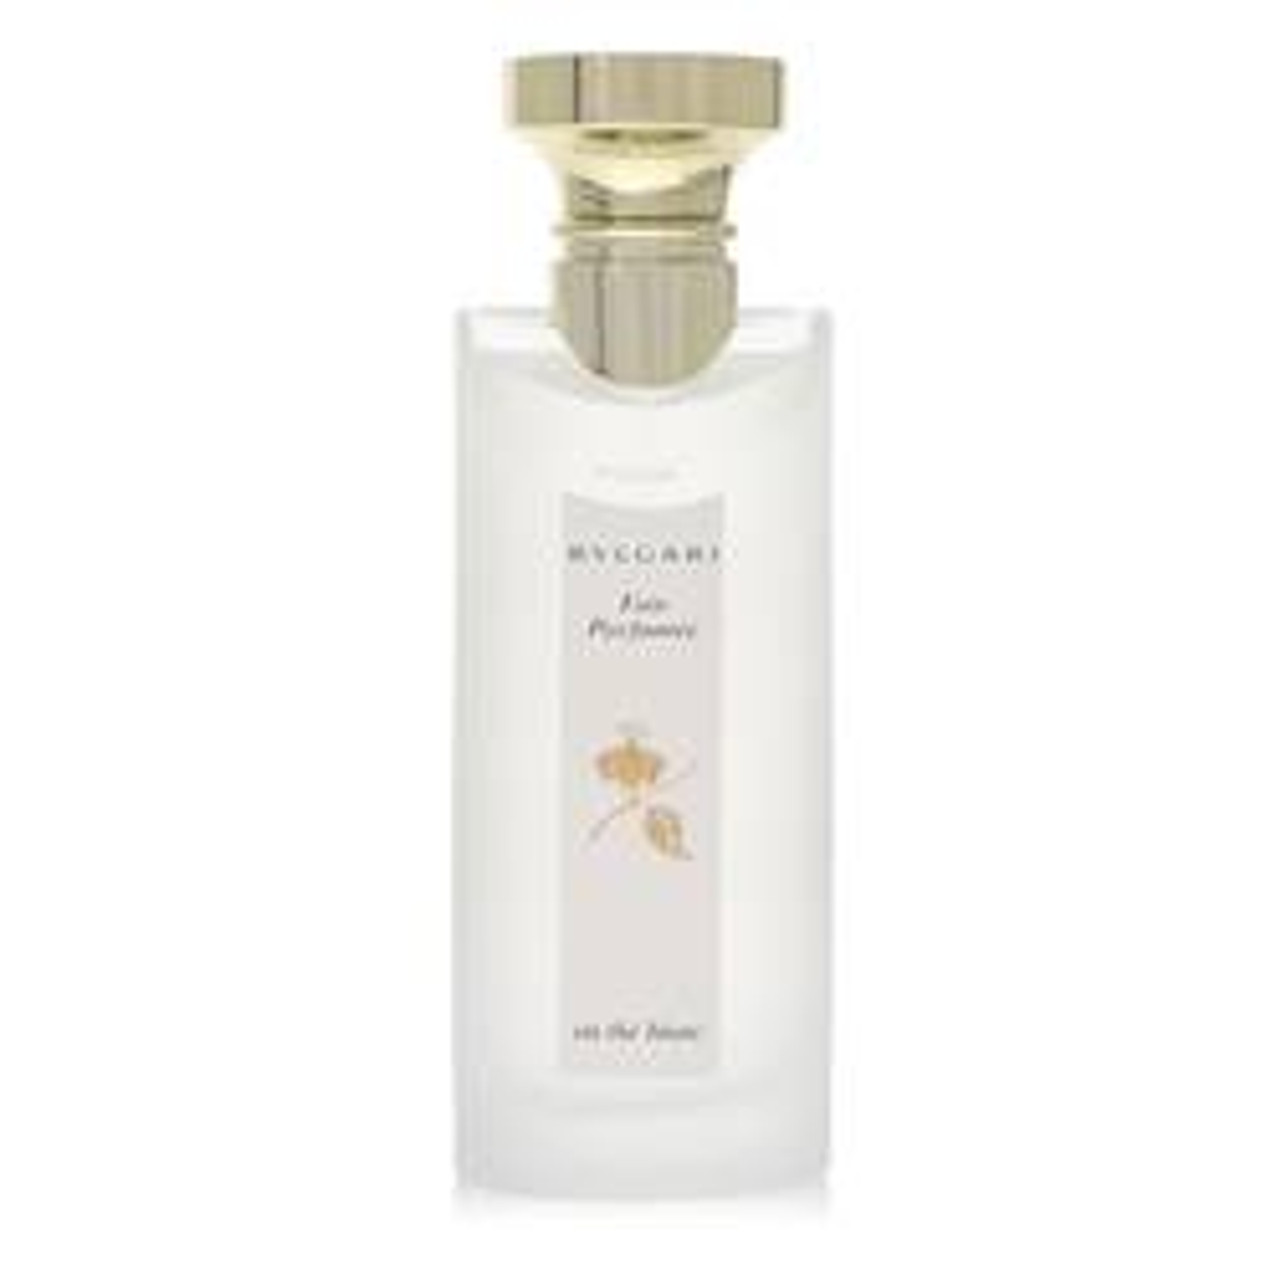 Bvlgari White Perfume By Bvlgari Eau De Cologne Spray (Tester) 2.5 oz for Women - *Pre-Order